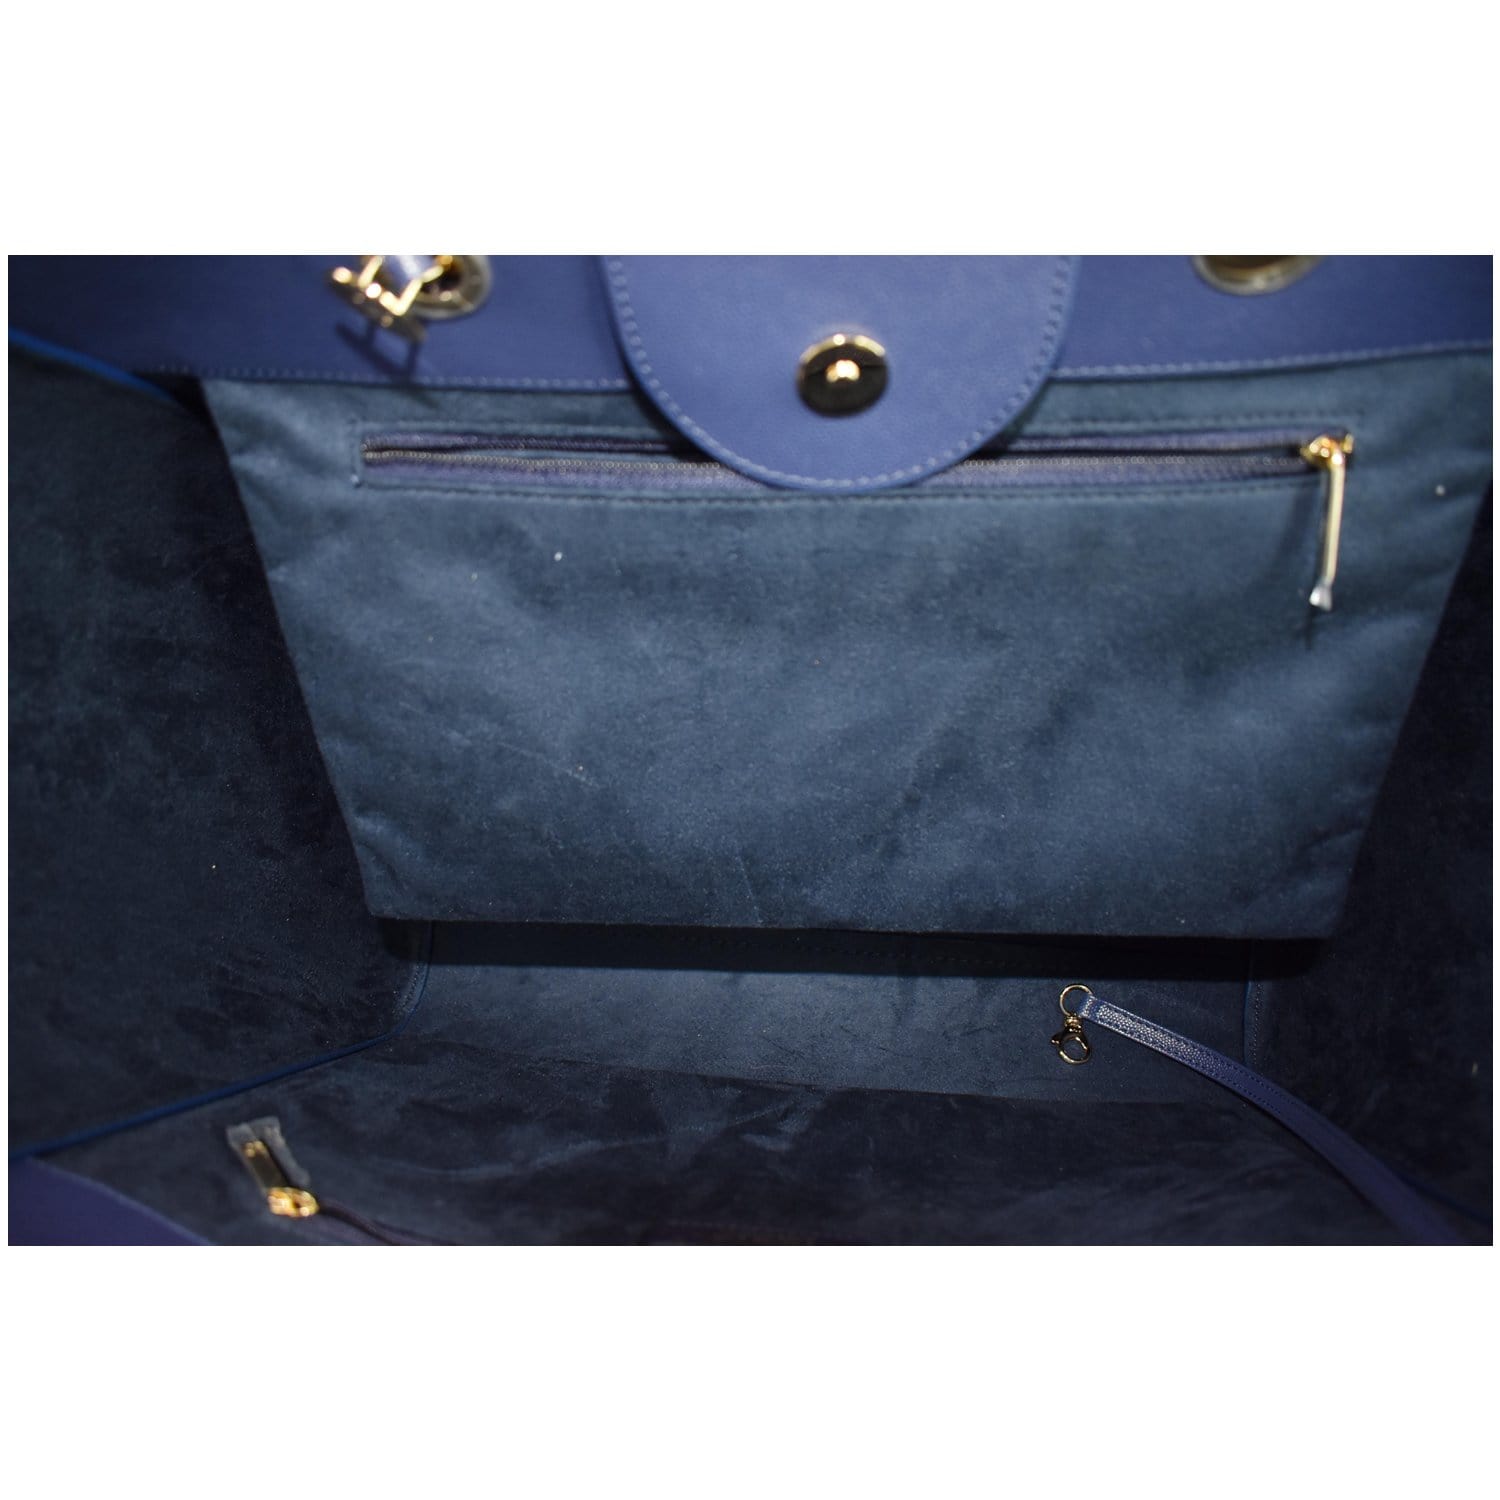 Chanel Deauville Studded Caviar Tote Shoulder Bag Blue